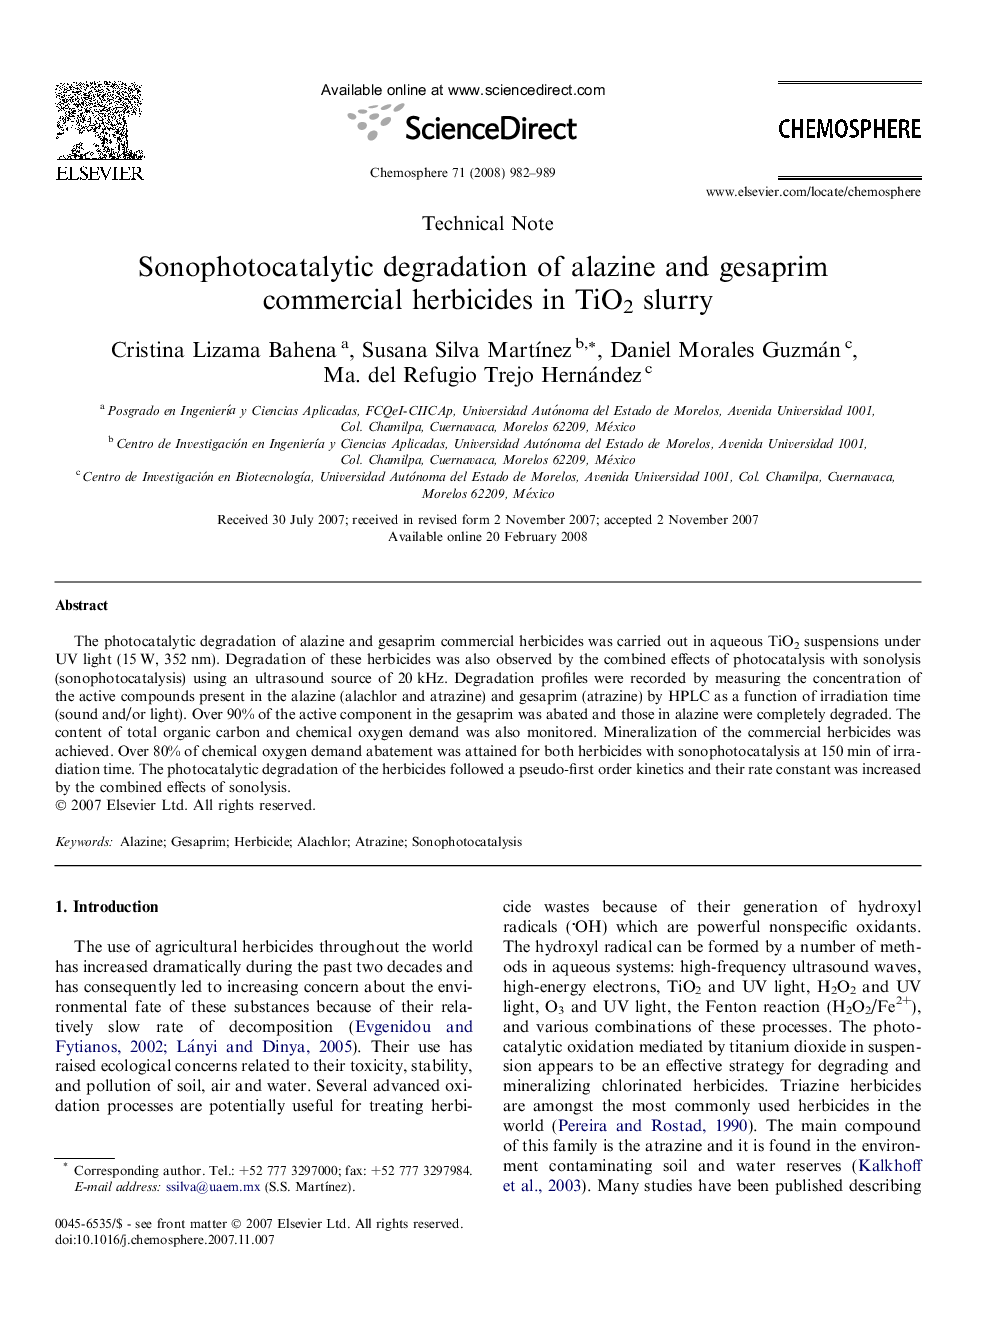 Sonophotocatalytic degradation of alazine and gesaprim commercial herbicides in TiO2 slurry